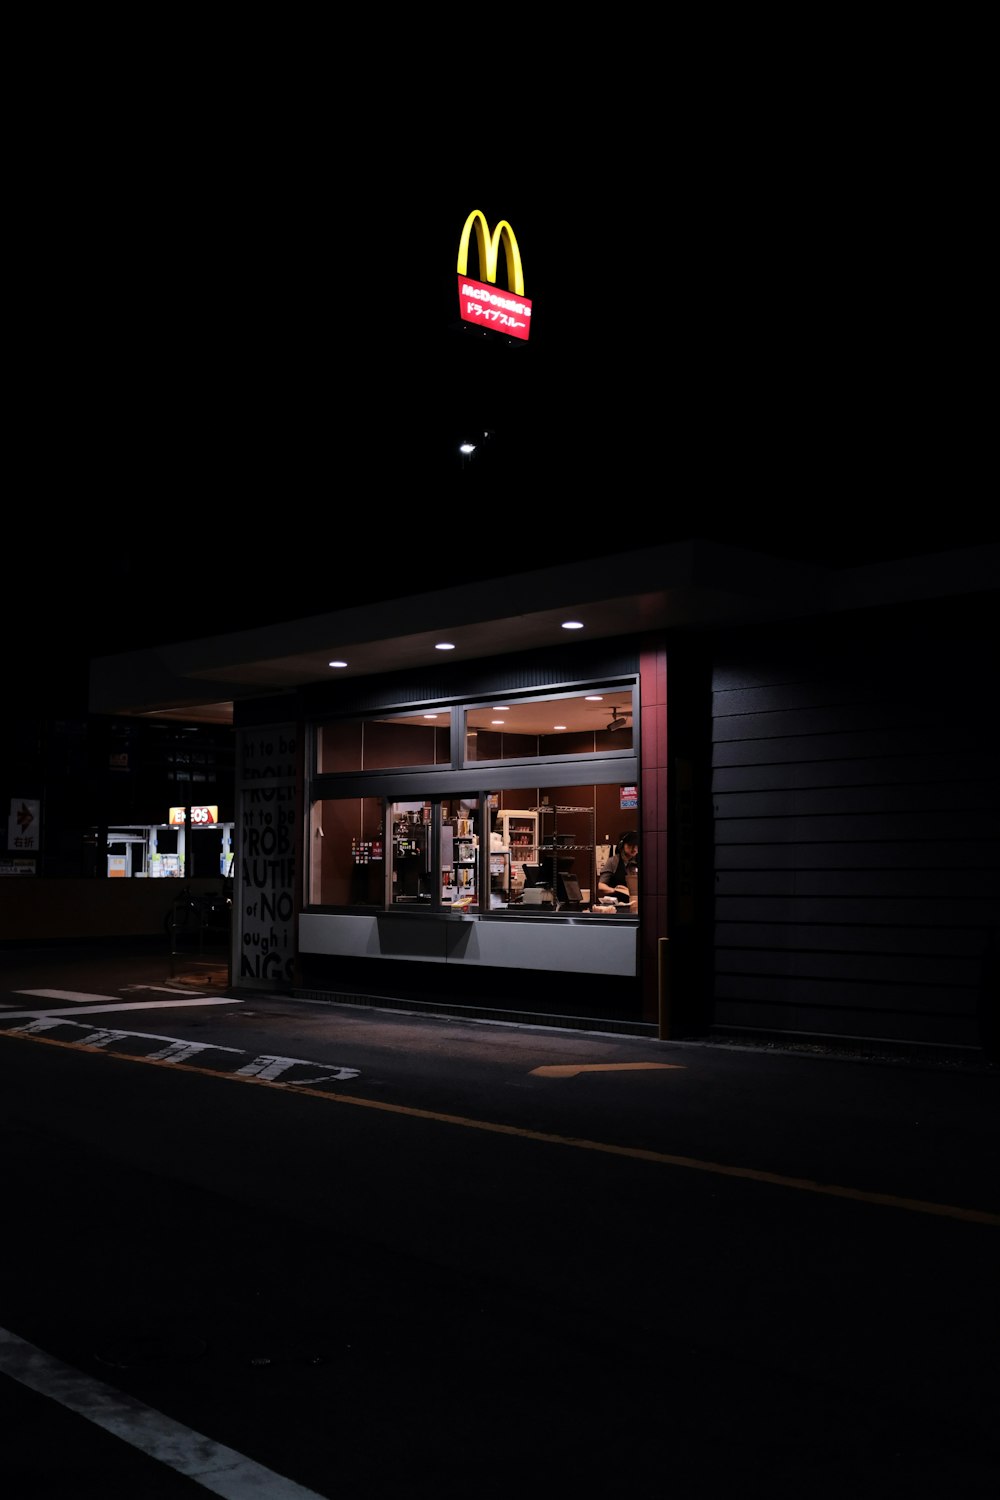 lighted McDonalds building at night